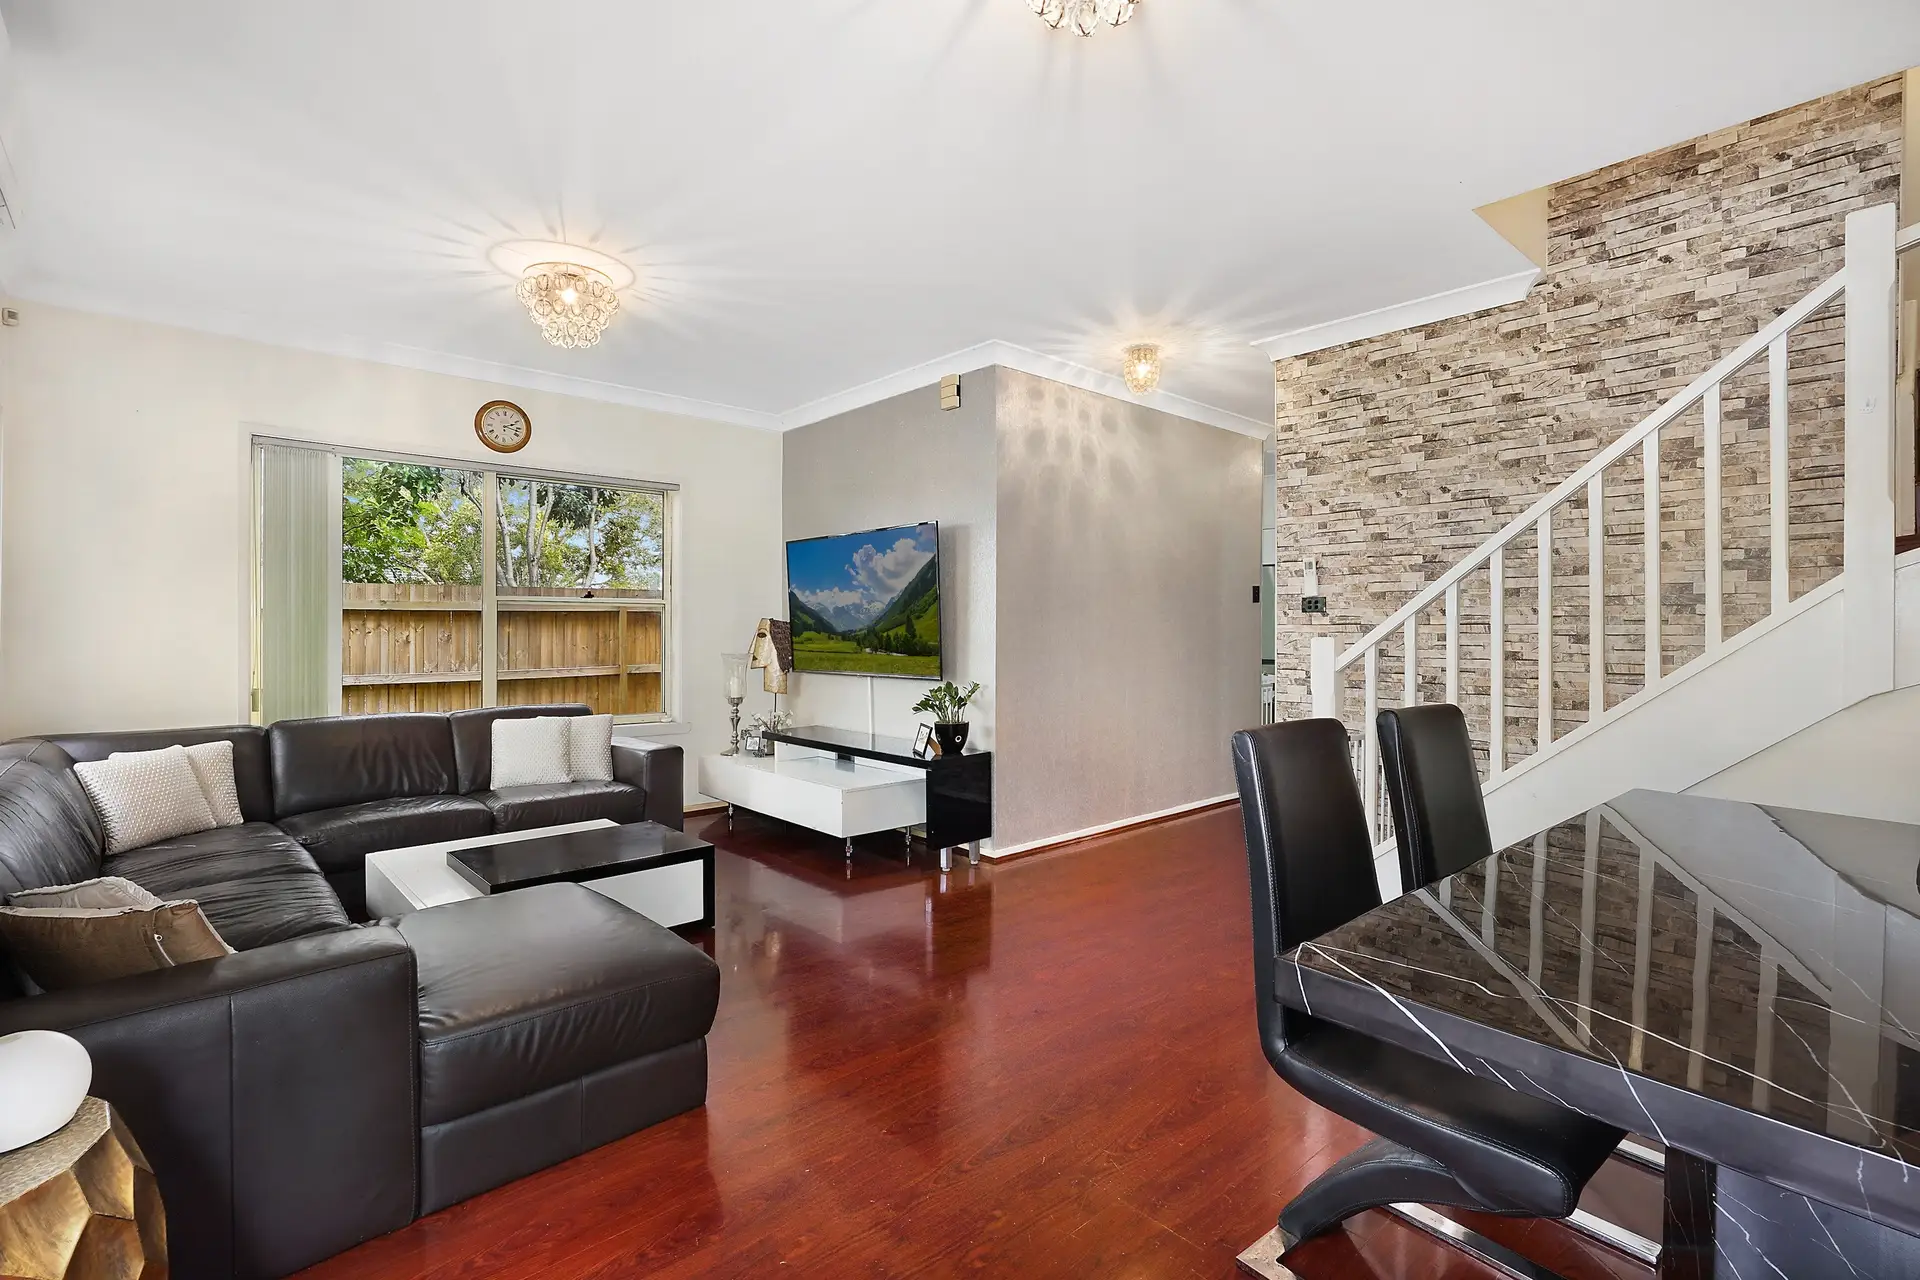 70/1 Bennett Avenue, Strathfield South Sold by Richard Matthews Real Estate - image 3